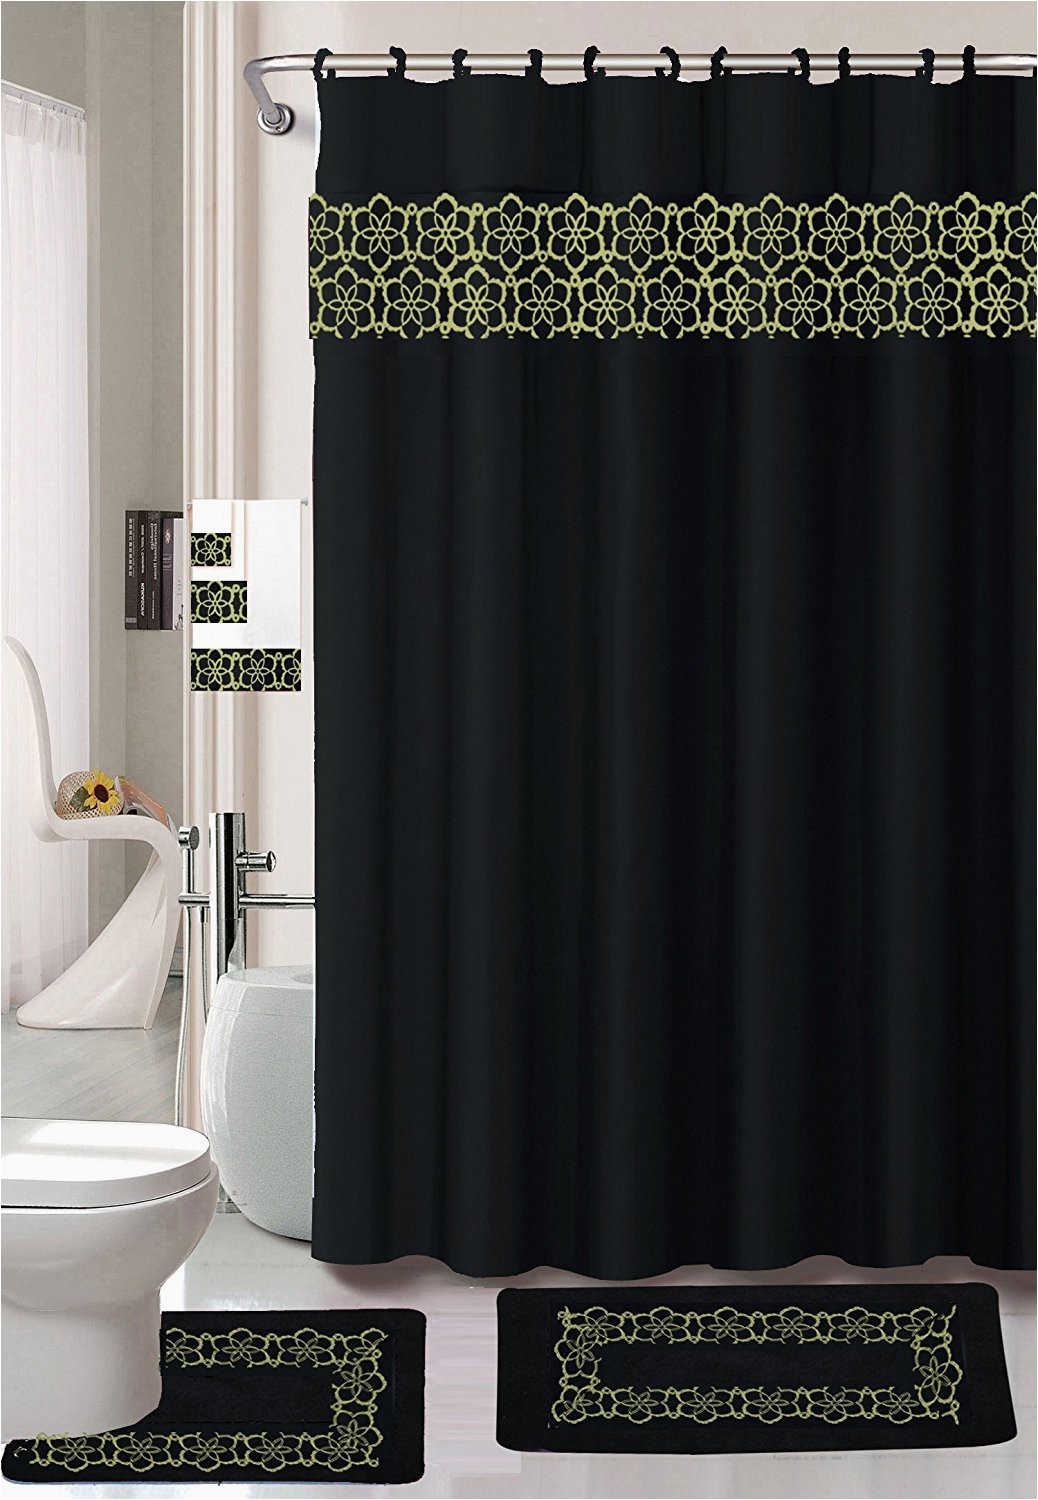 Bath Rug and towel Sets Empire Home 18 Piece Embroidered Floral Bathroom Set Bath Rugs Shower Curtain Hooks & 3pc towel Set Black